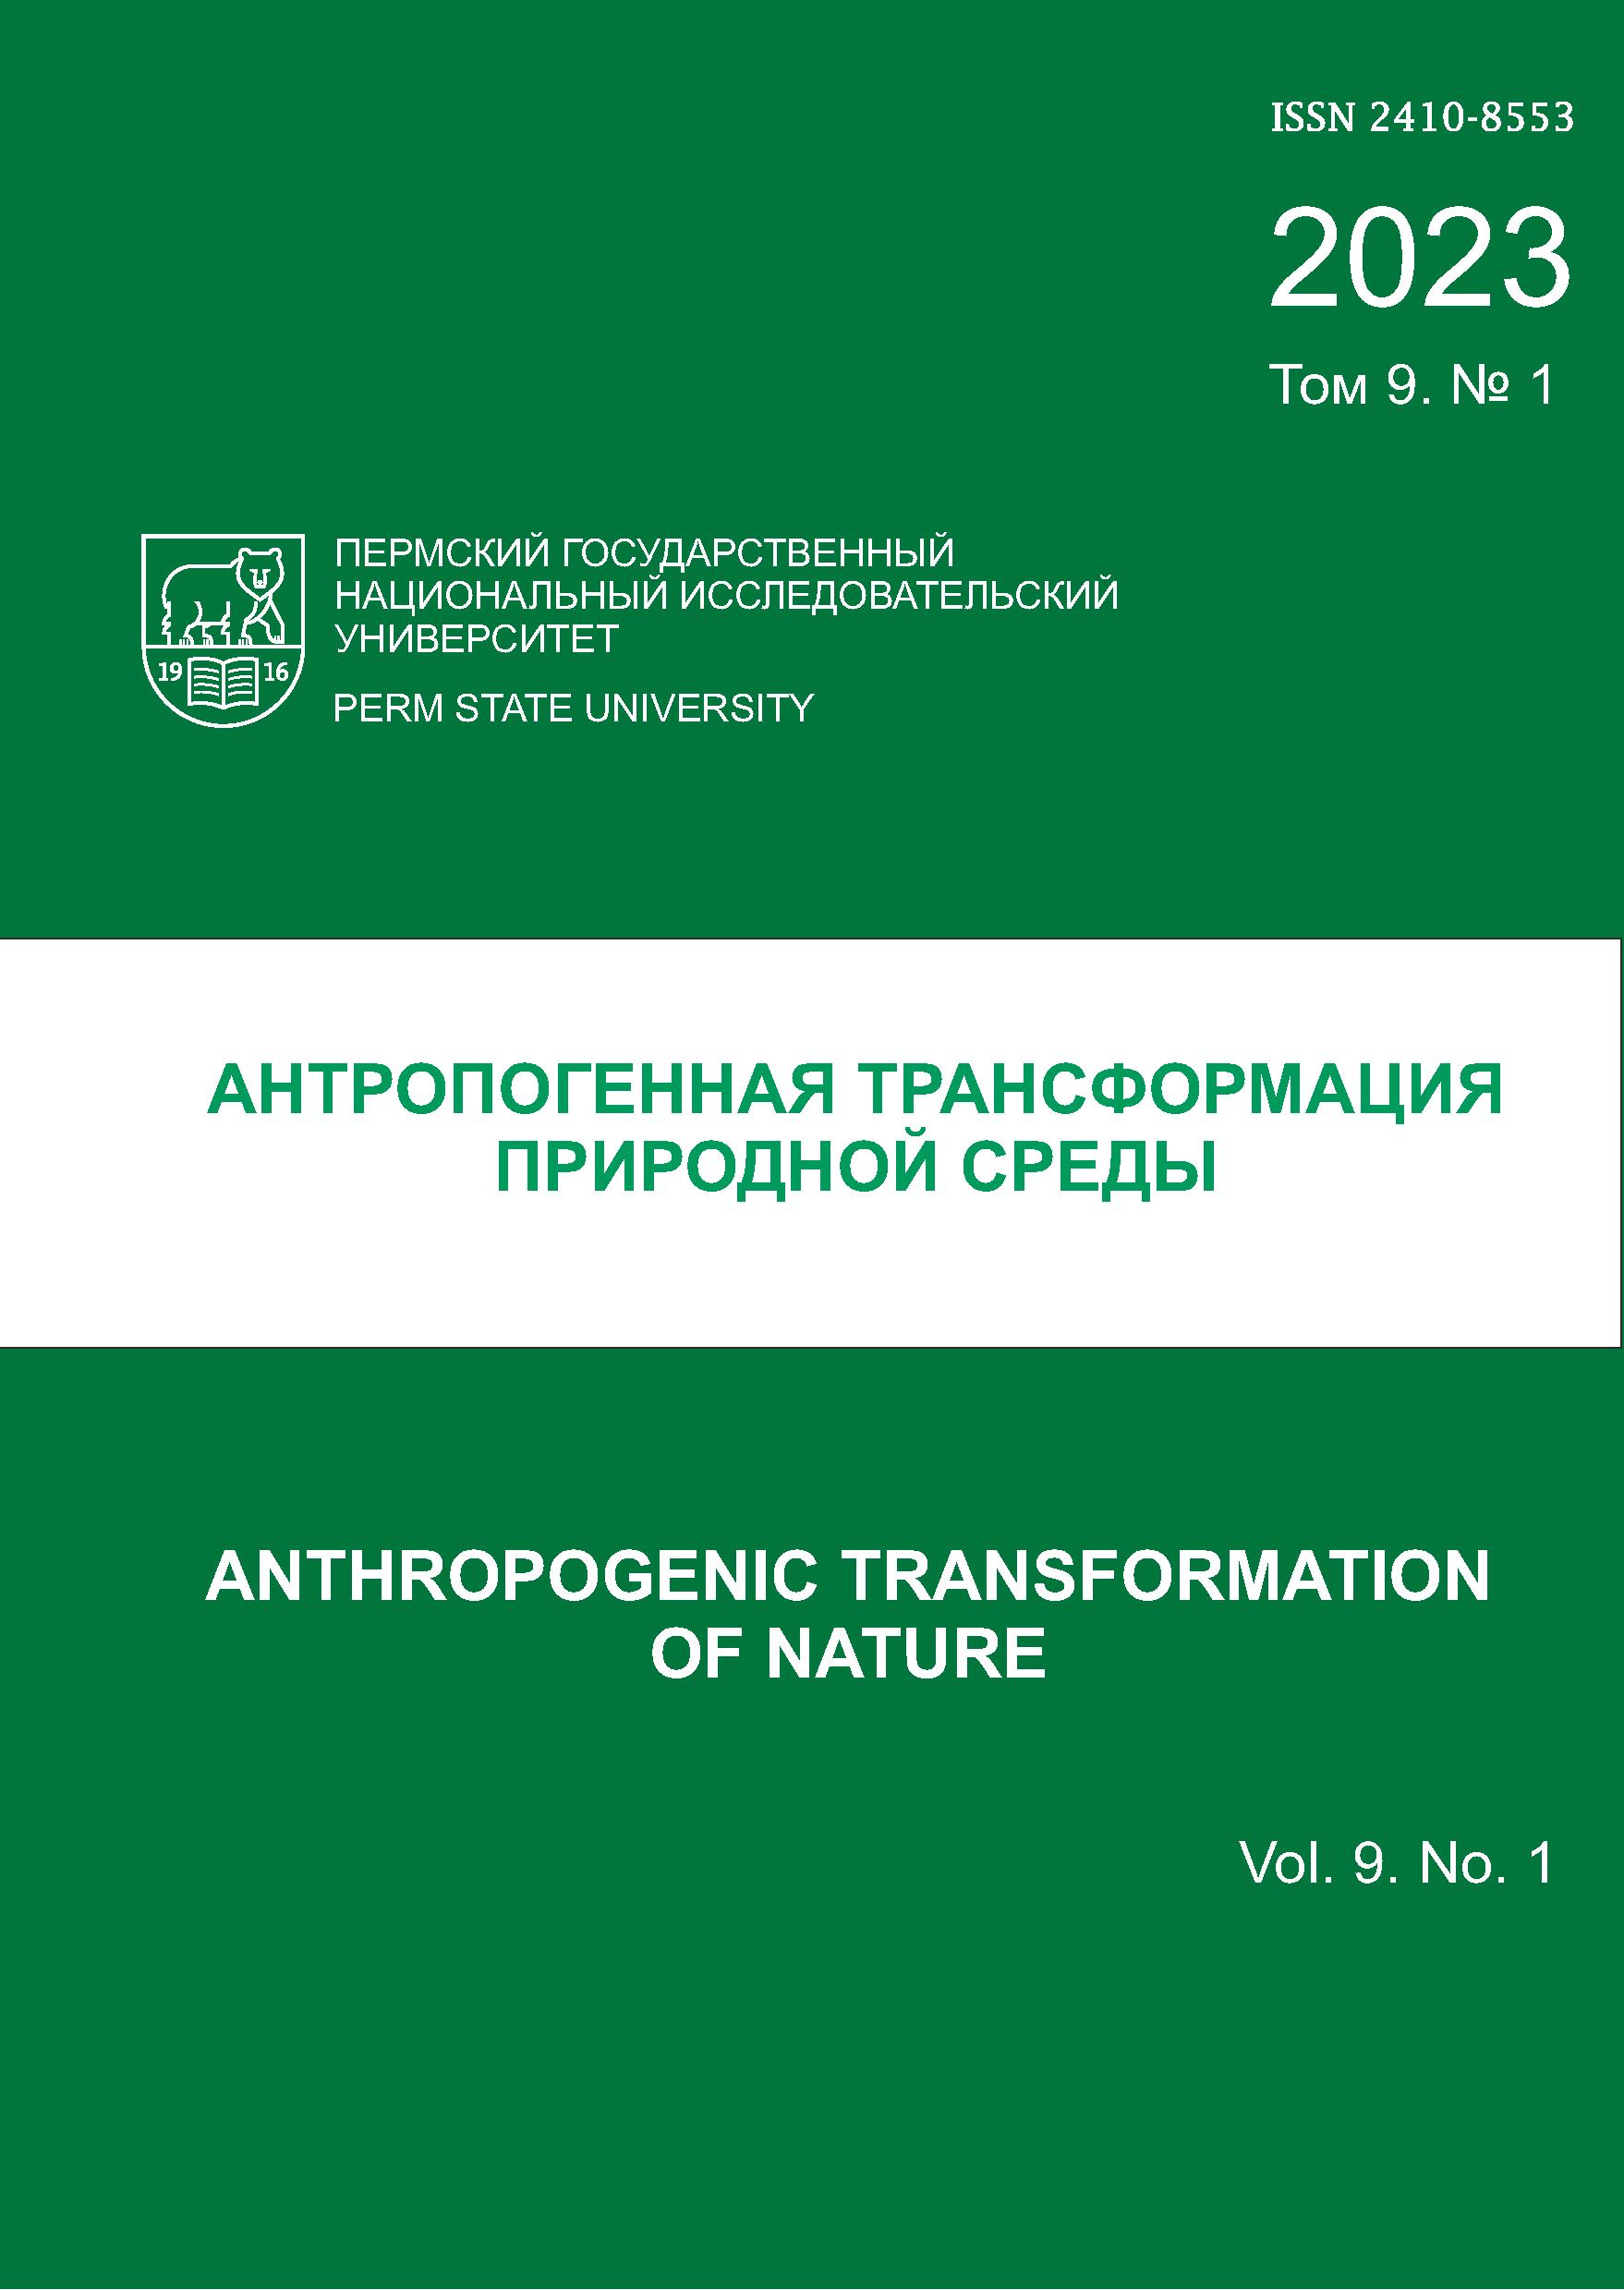 					View Vol. 9 No. 1 (2023): Anthropogenic Transformation of Nature
				